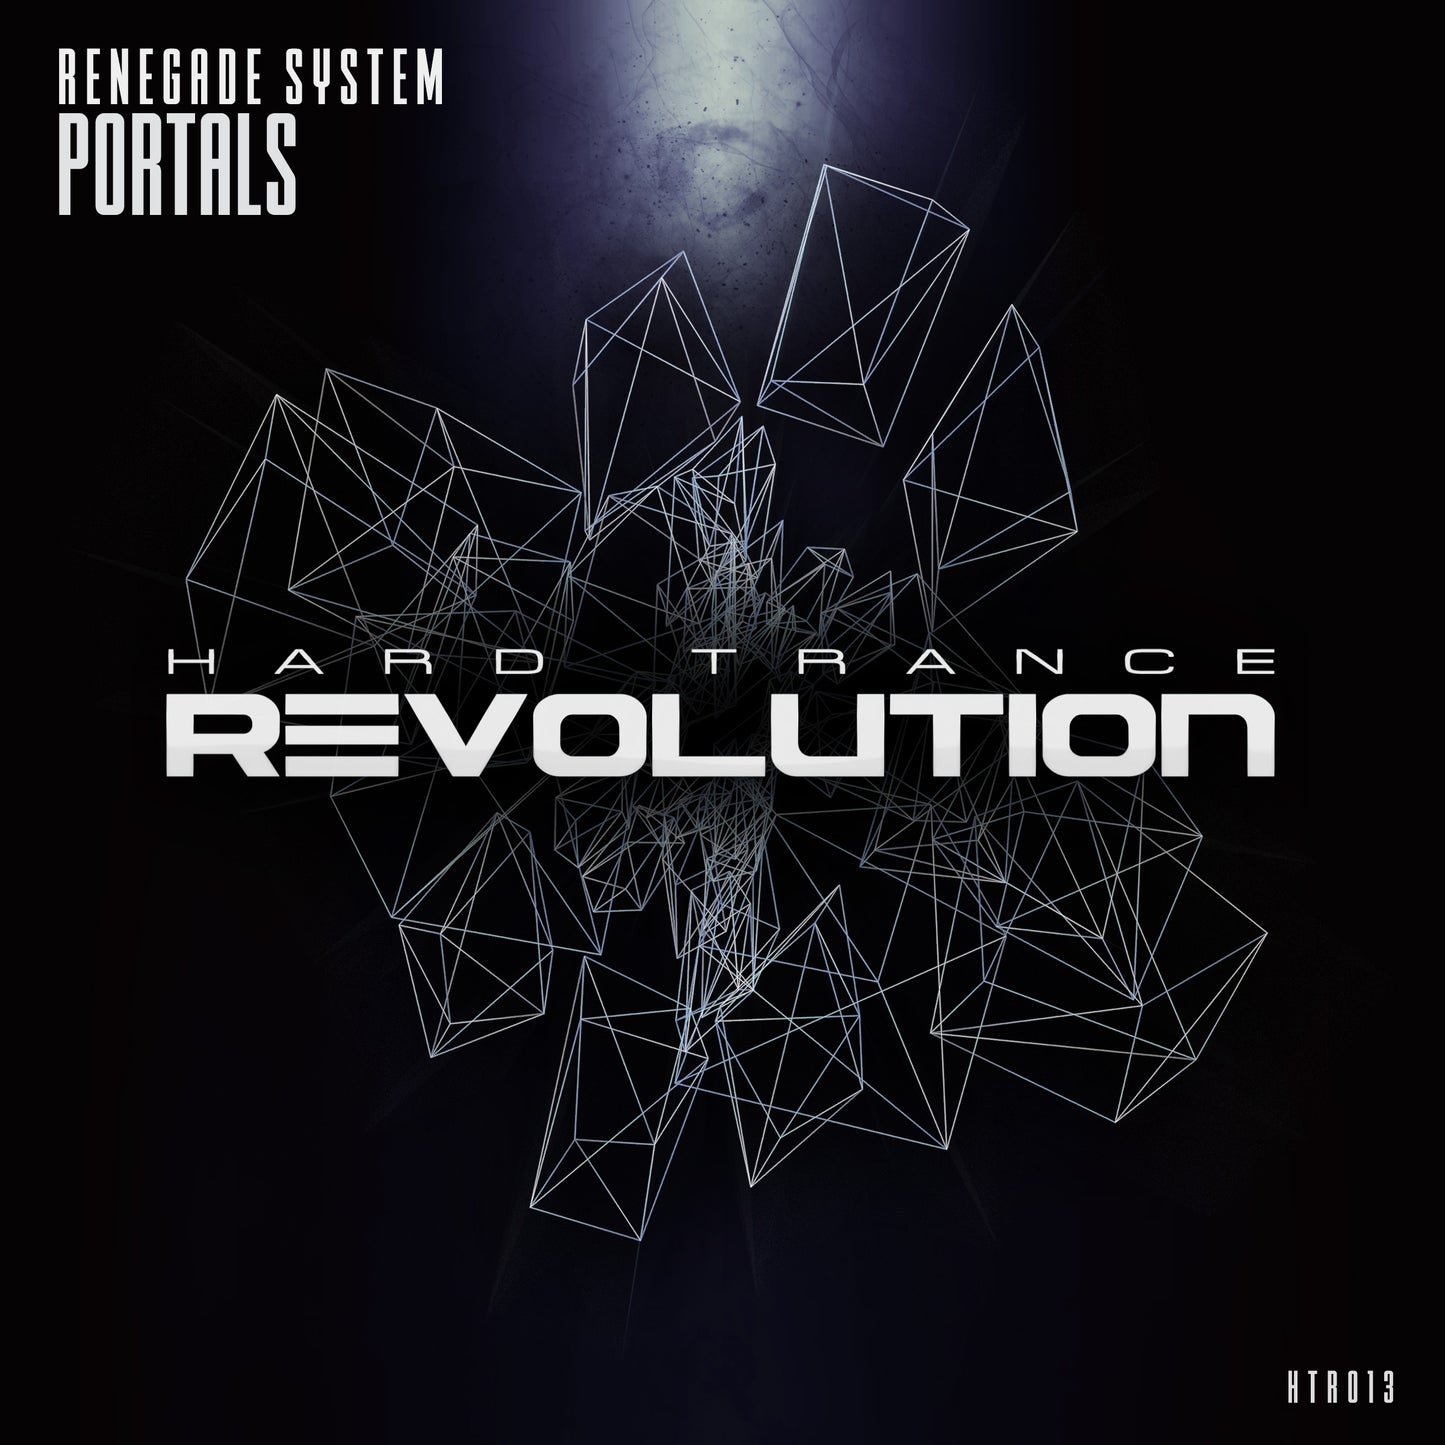 HTR013 - Renegade System - Portals (Extended Mix)